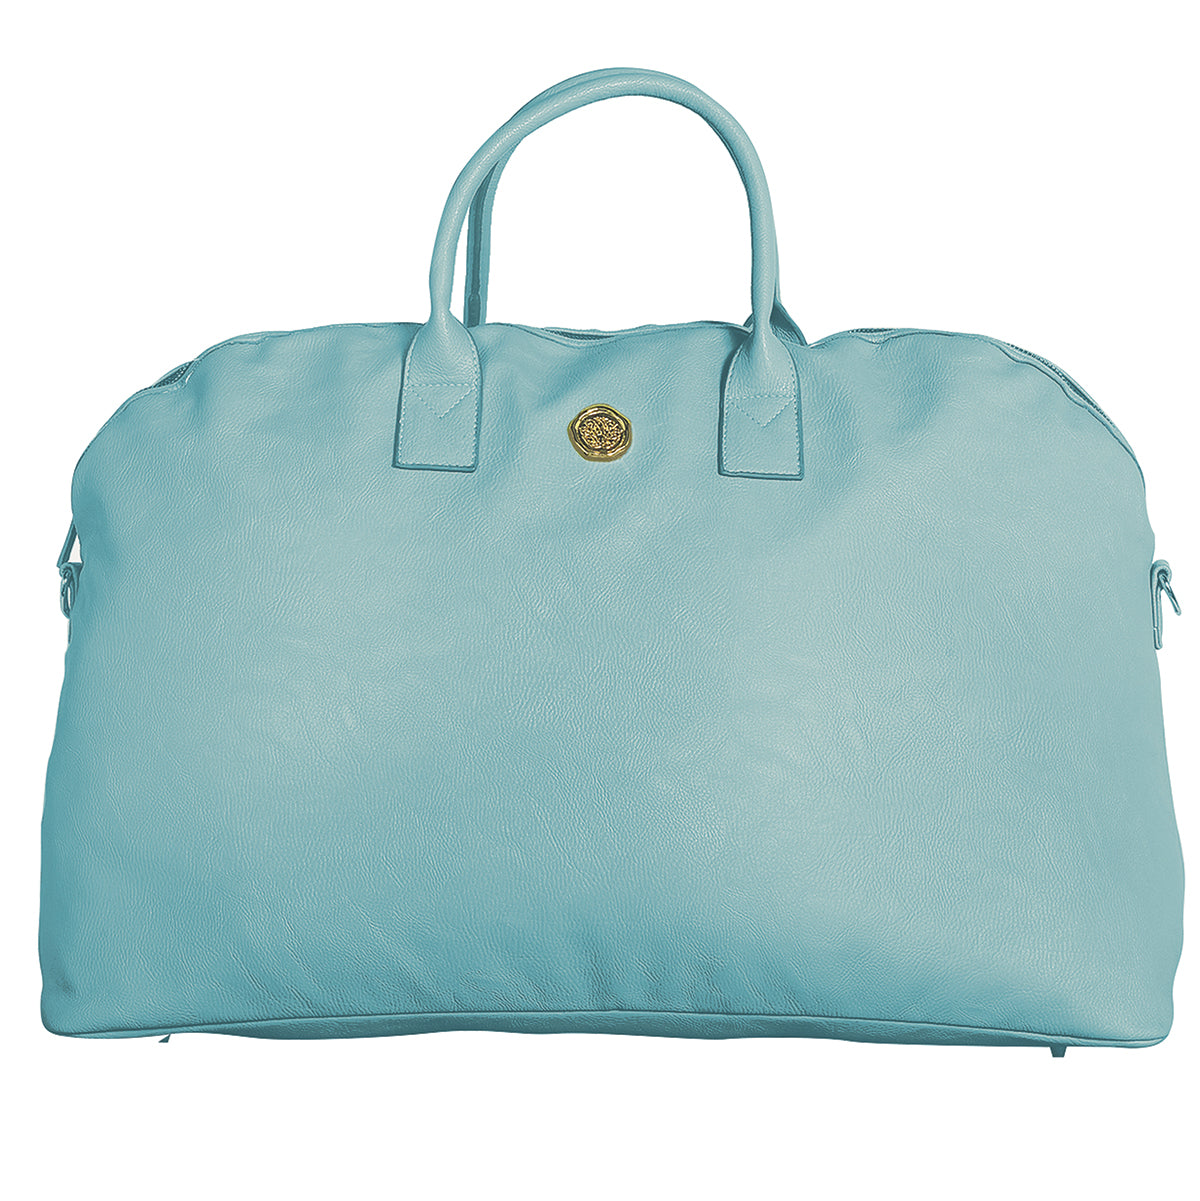 a light blue bag with a gold emblem on it.